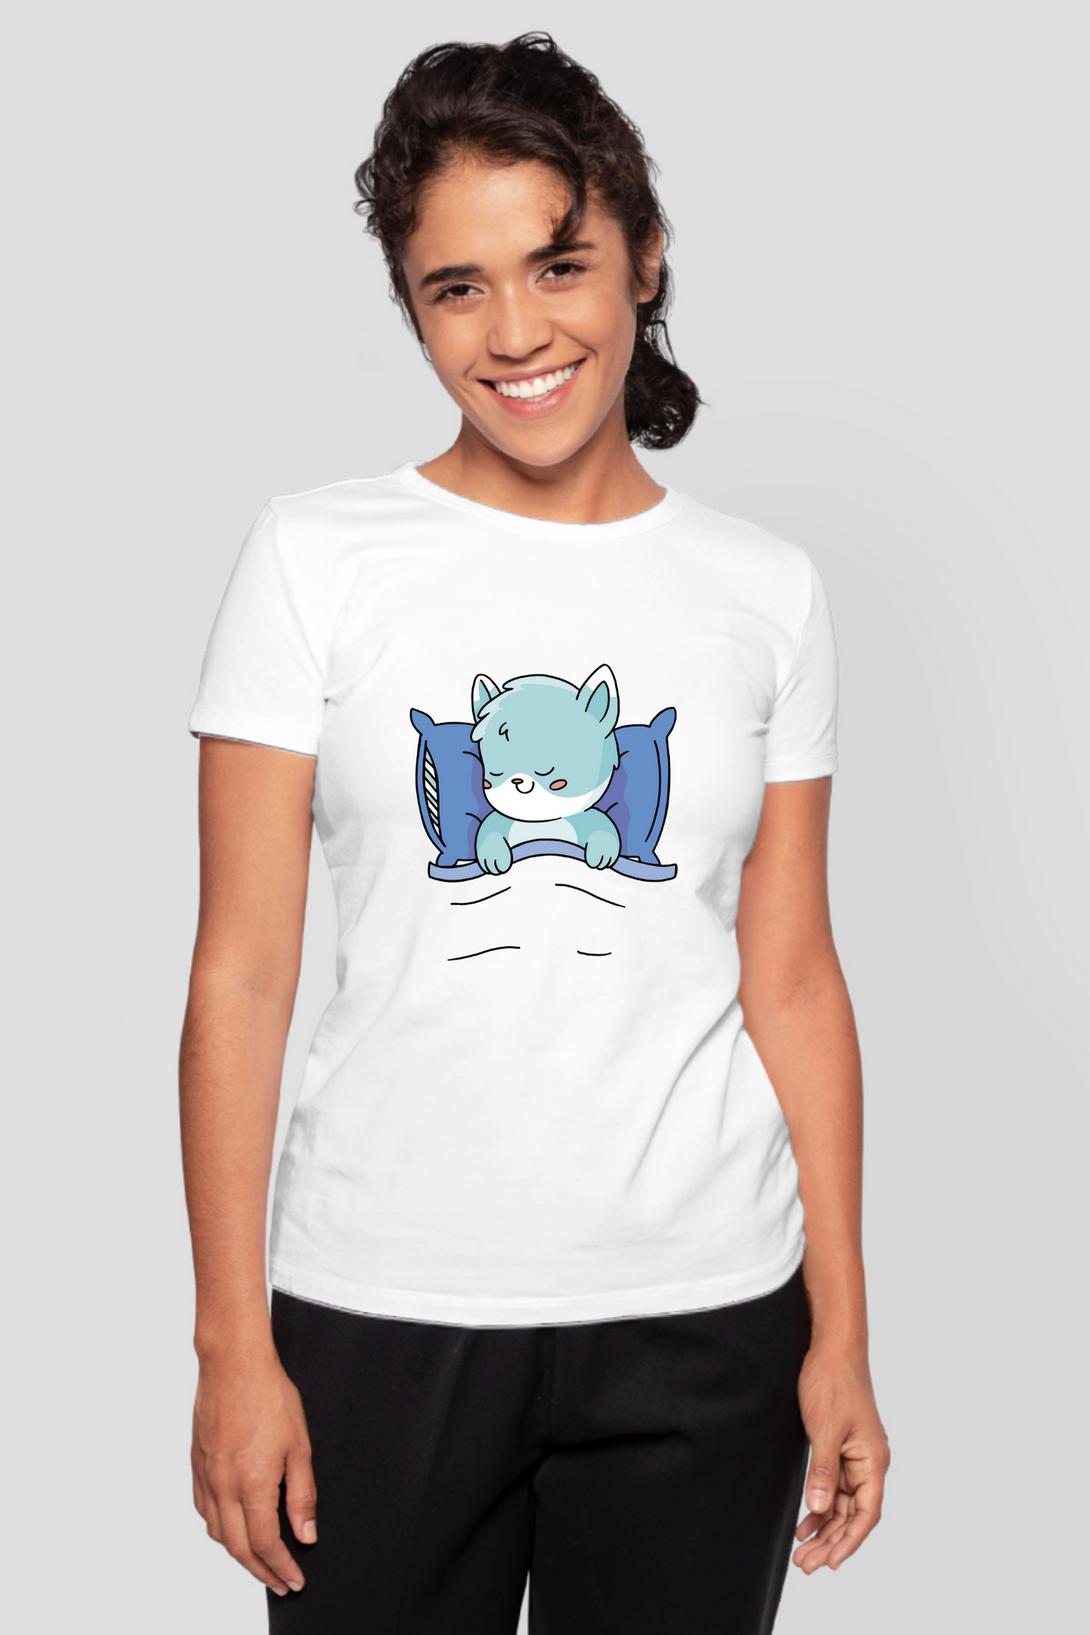 Cute Sleeping Cat Printed T-Shirt For Women - WowWaves - 7